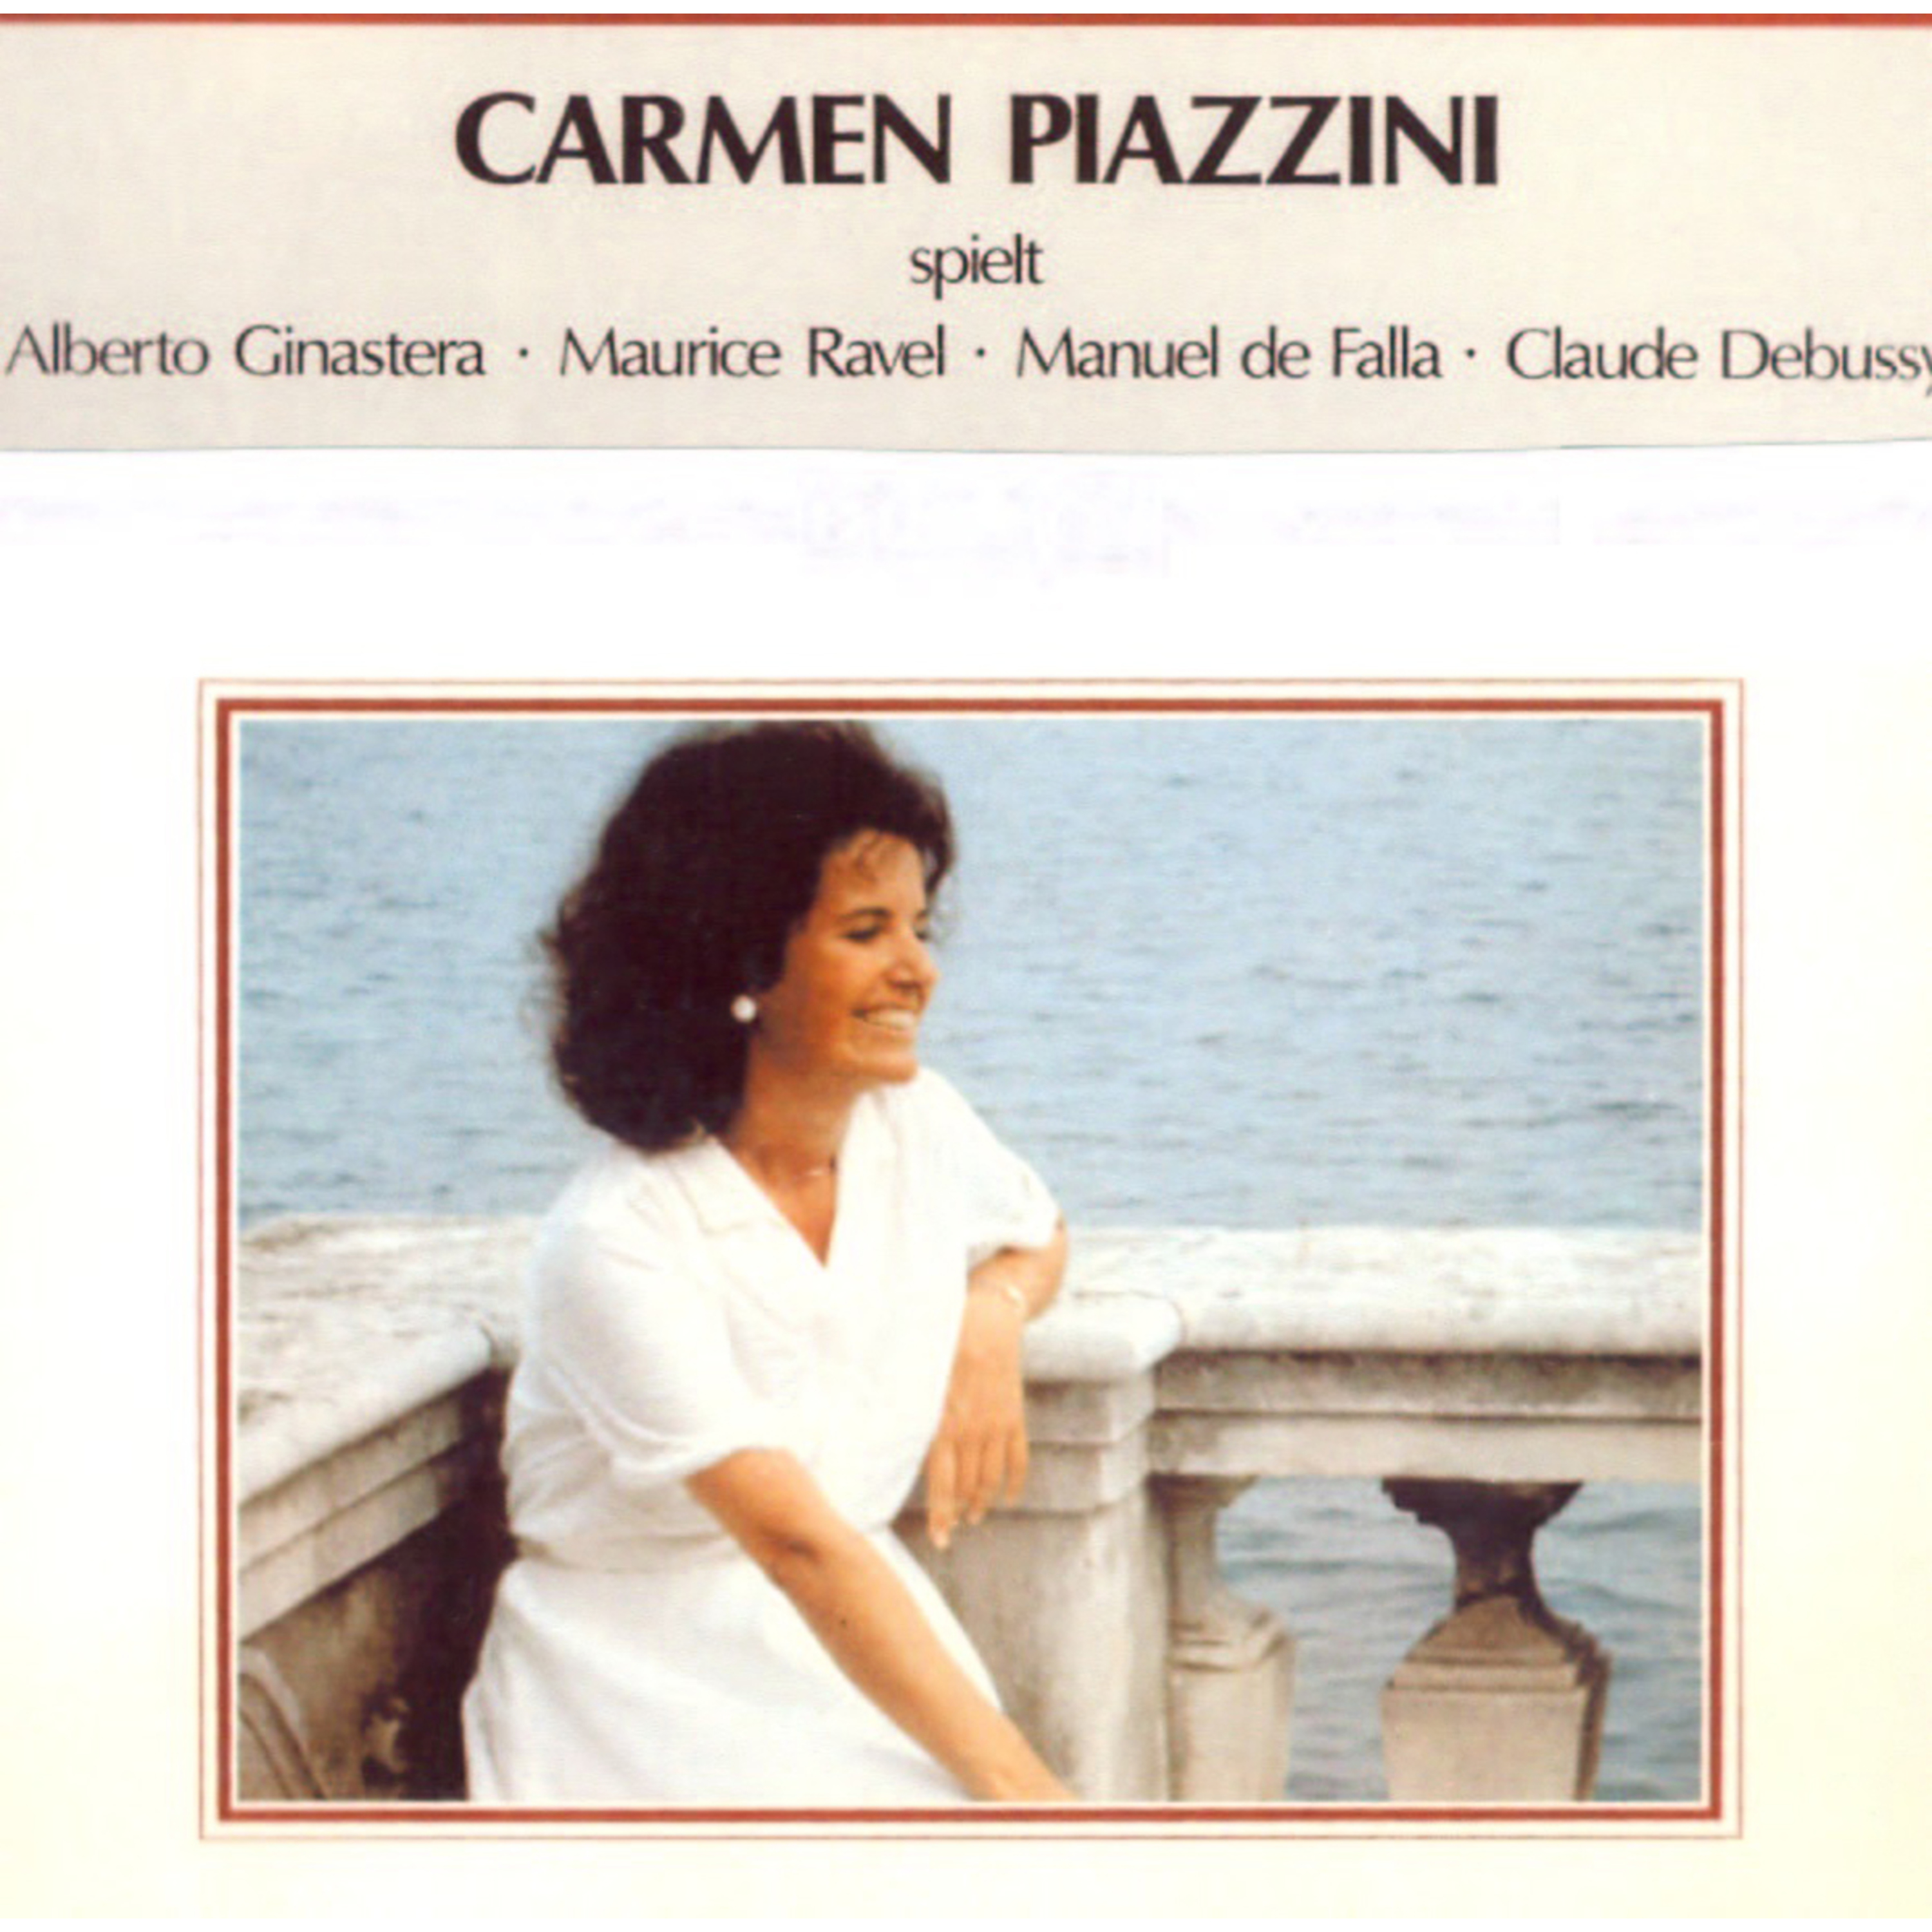 Carmen Piazzini spielt Alberto Ginastera, Maurice Ravel, Manuel de Falla, Claude Debussy